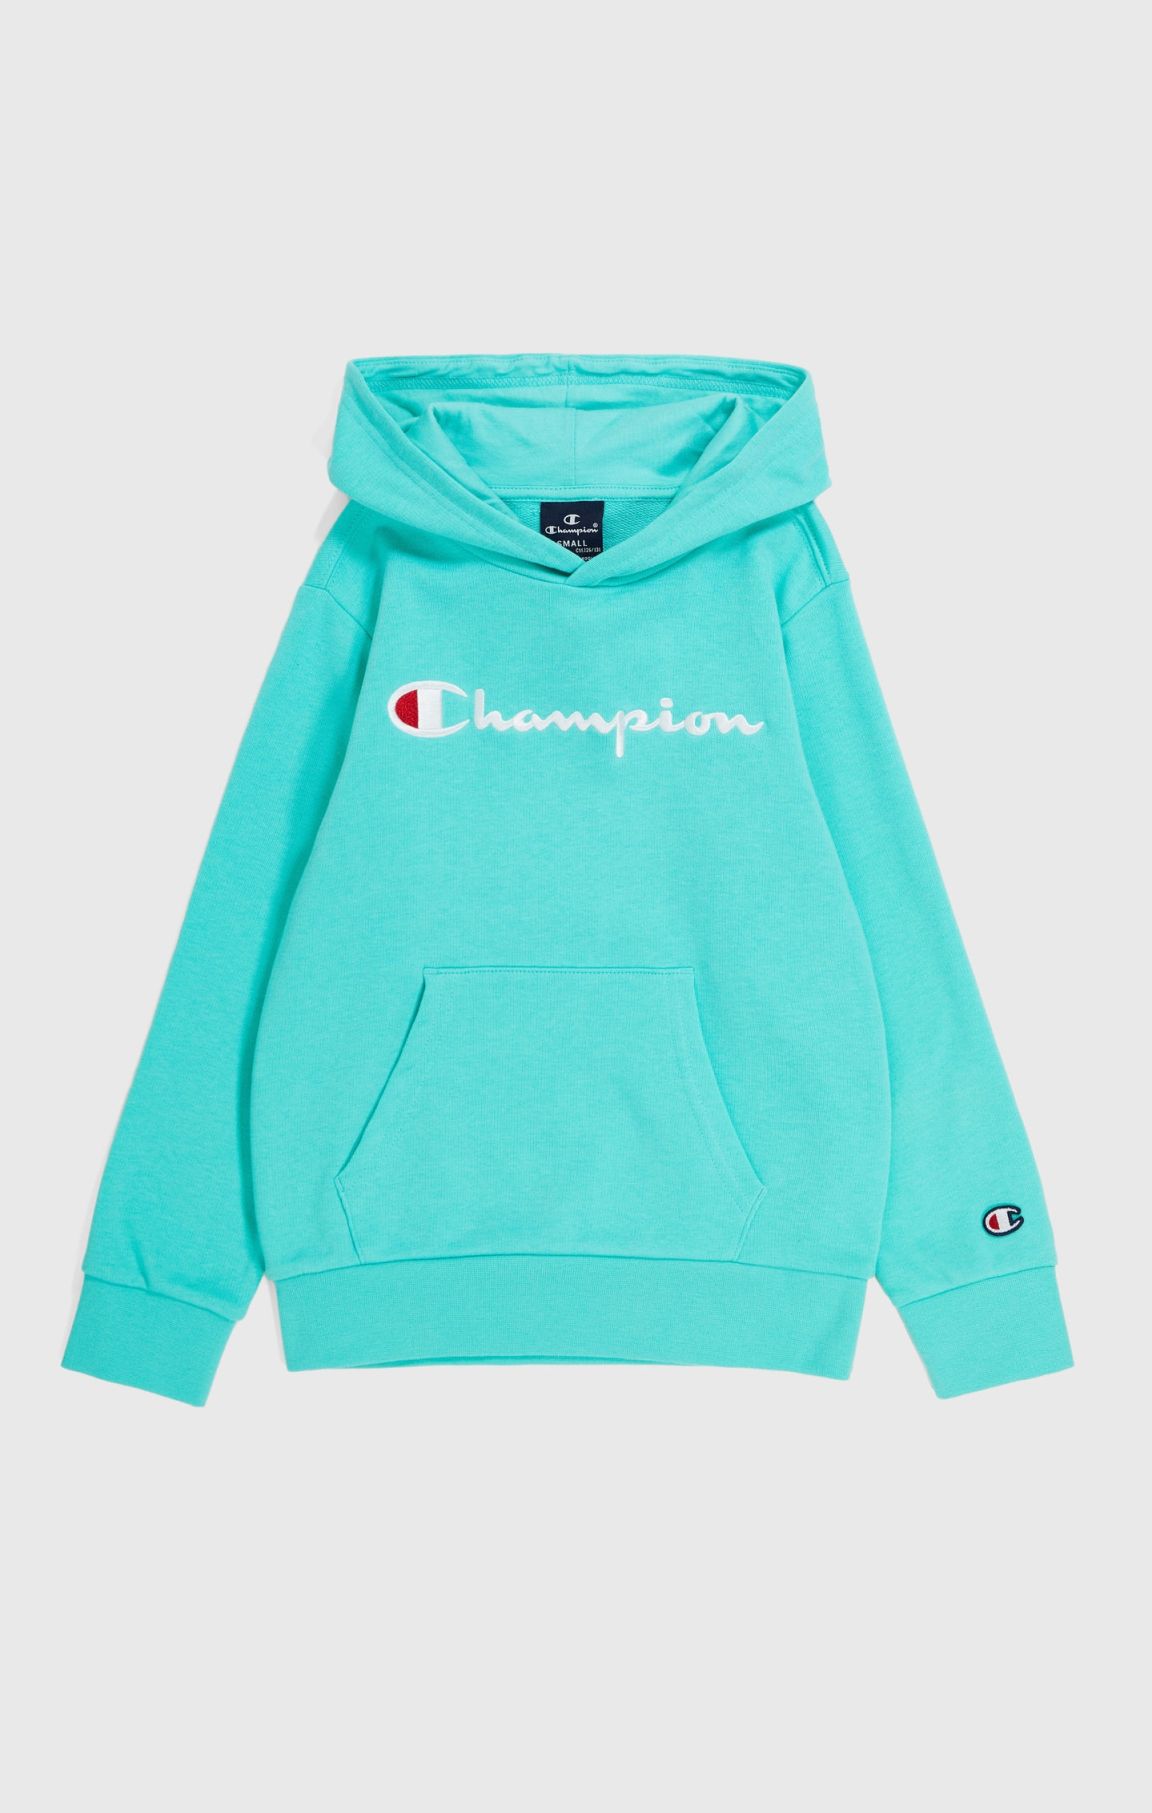 Sweatshirt à capuche et grand logo Champion - Garçons